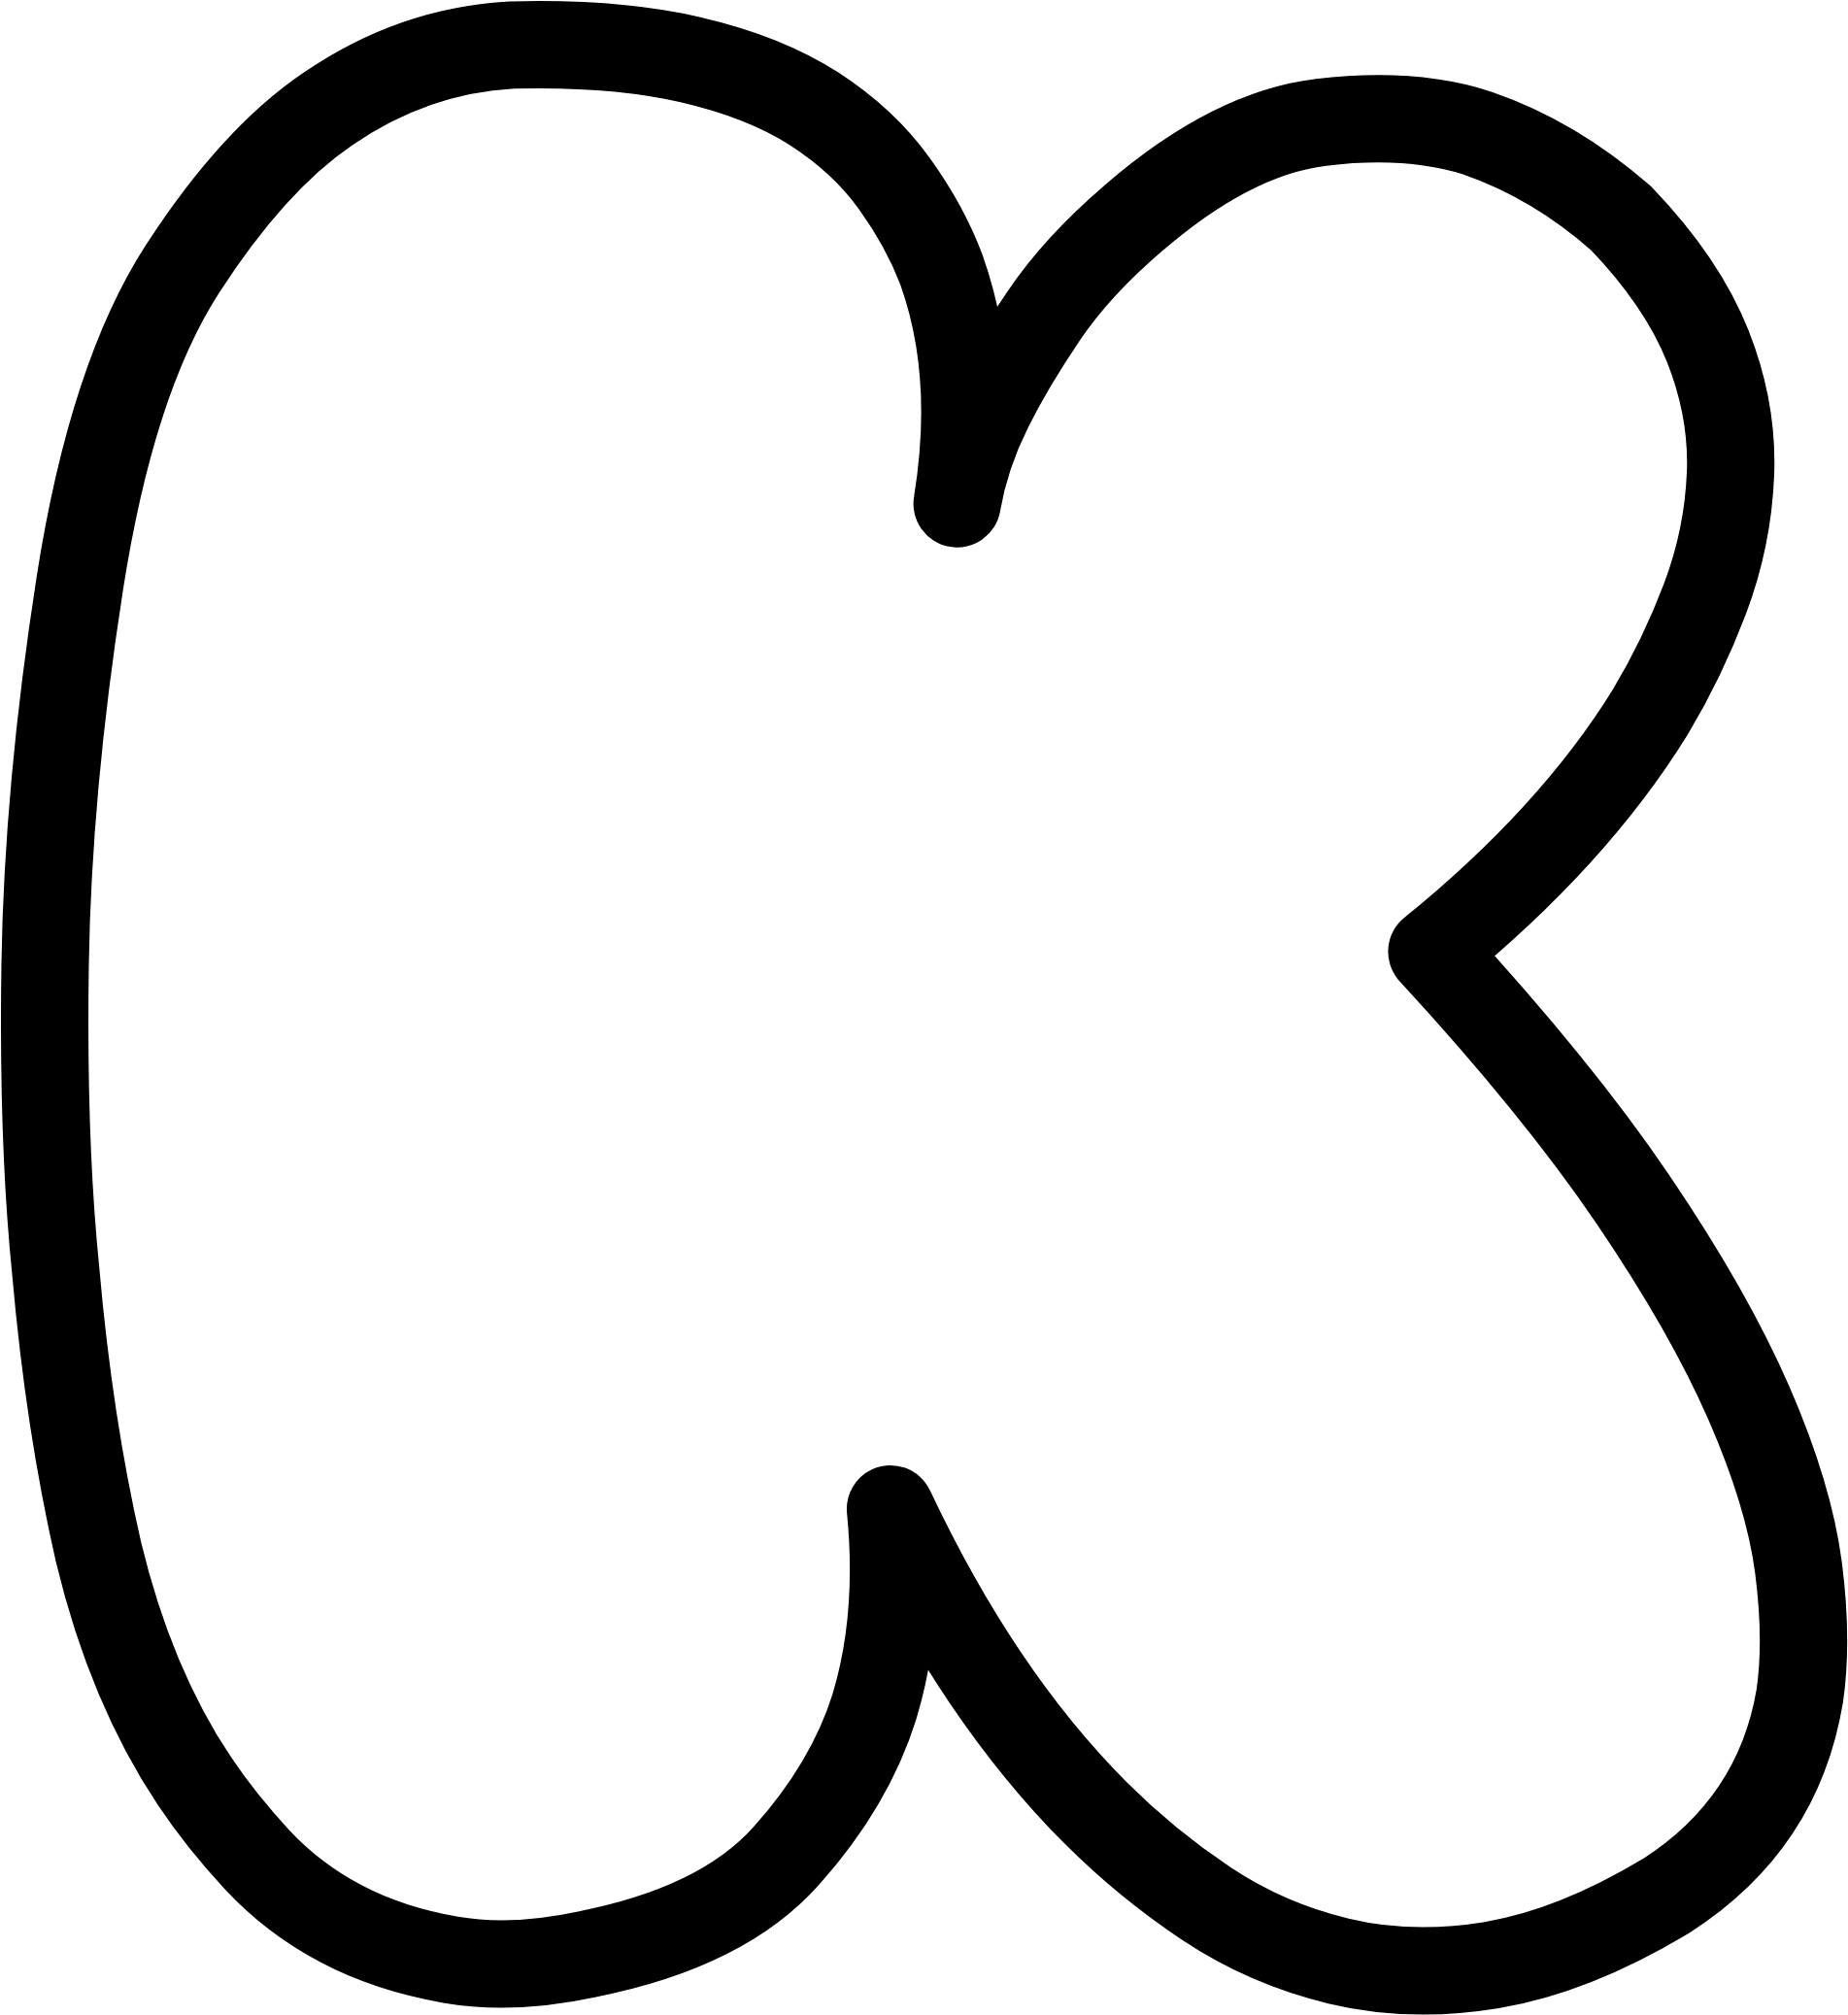 Download Uppercase Bubble Letter K - Letter K Bubble Letter - ClipartKey